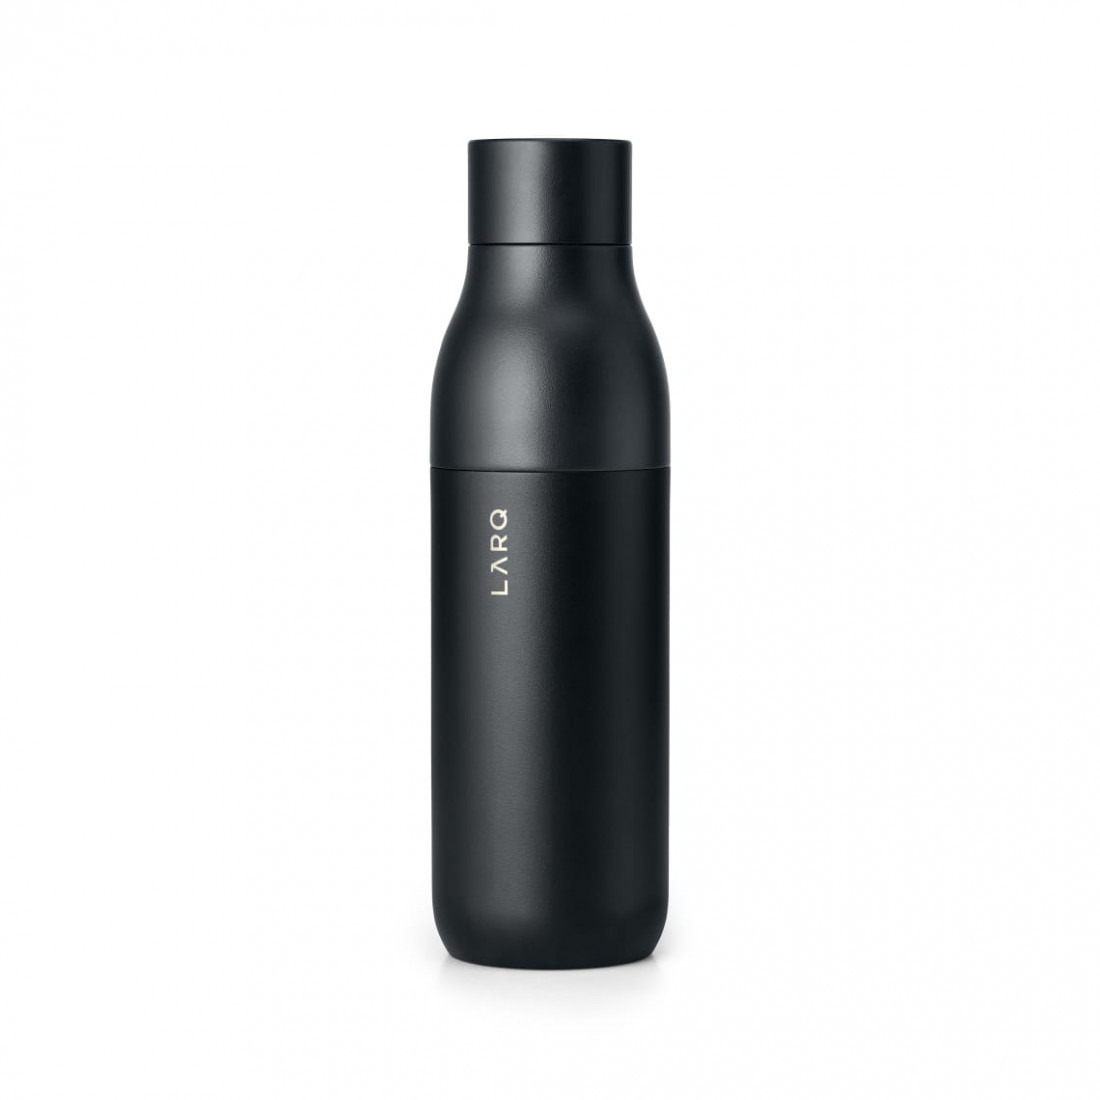 LARQ Bottle PureVis Obsidian Black 740 ml - Insulated